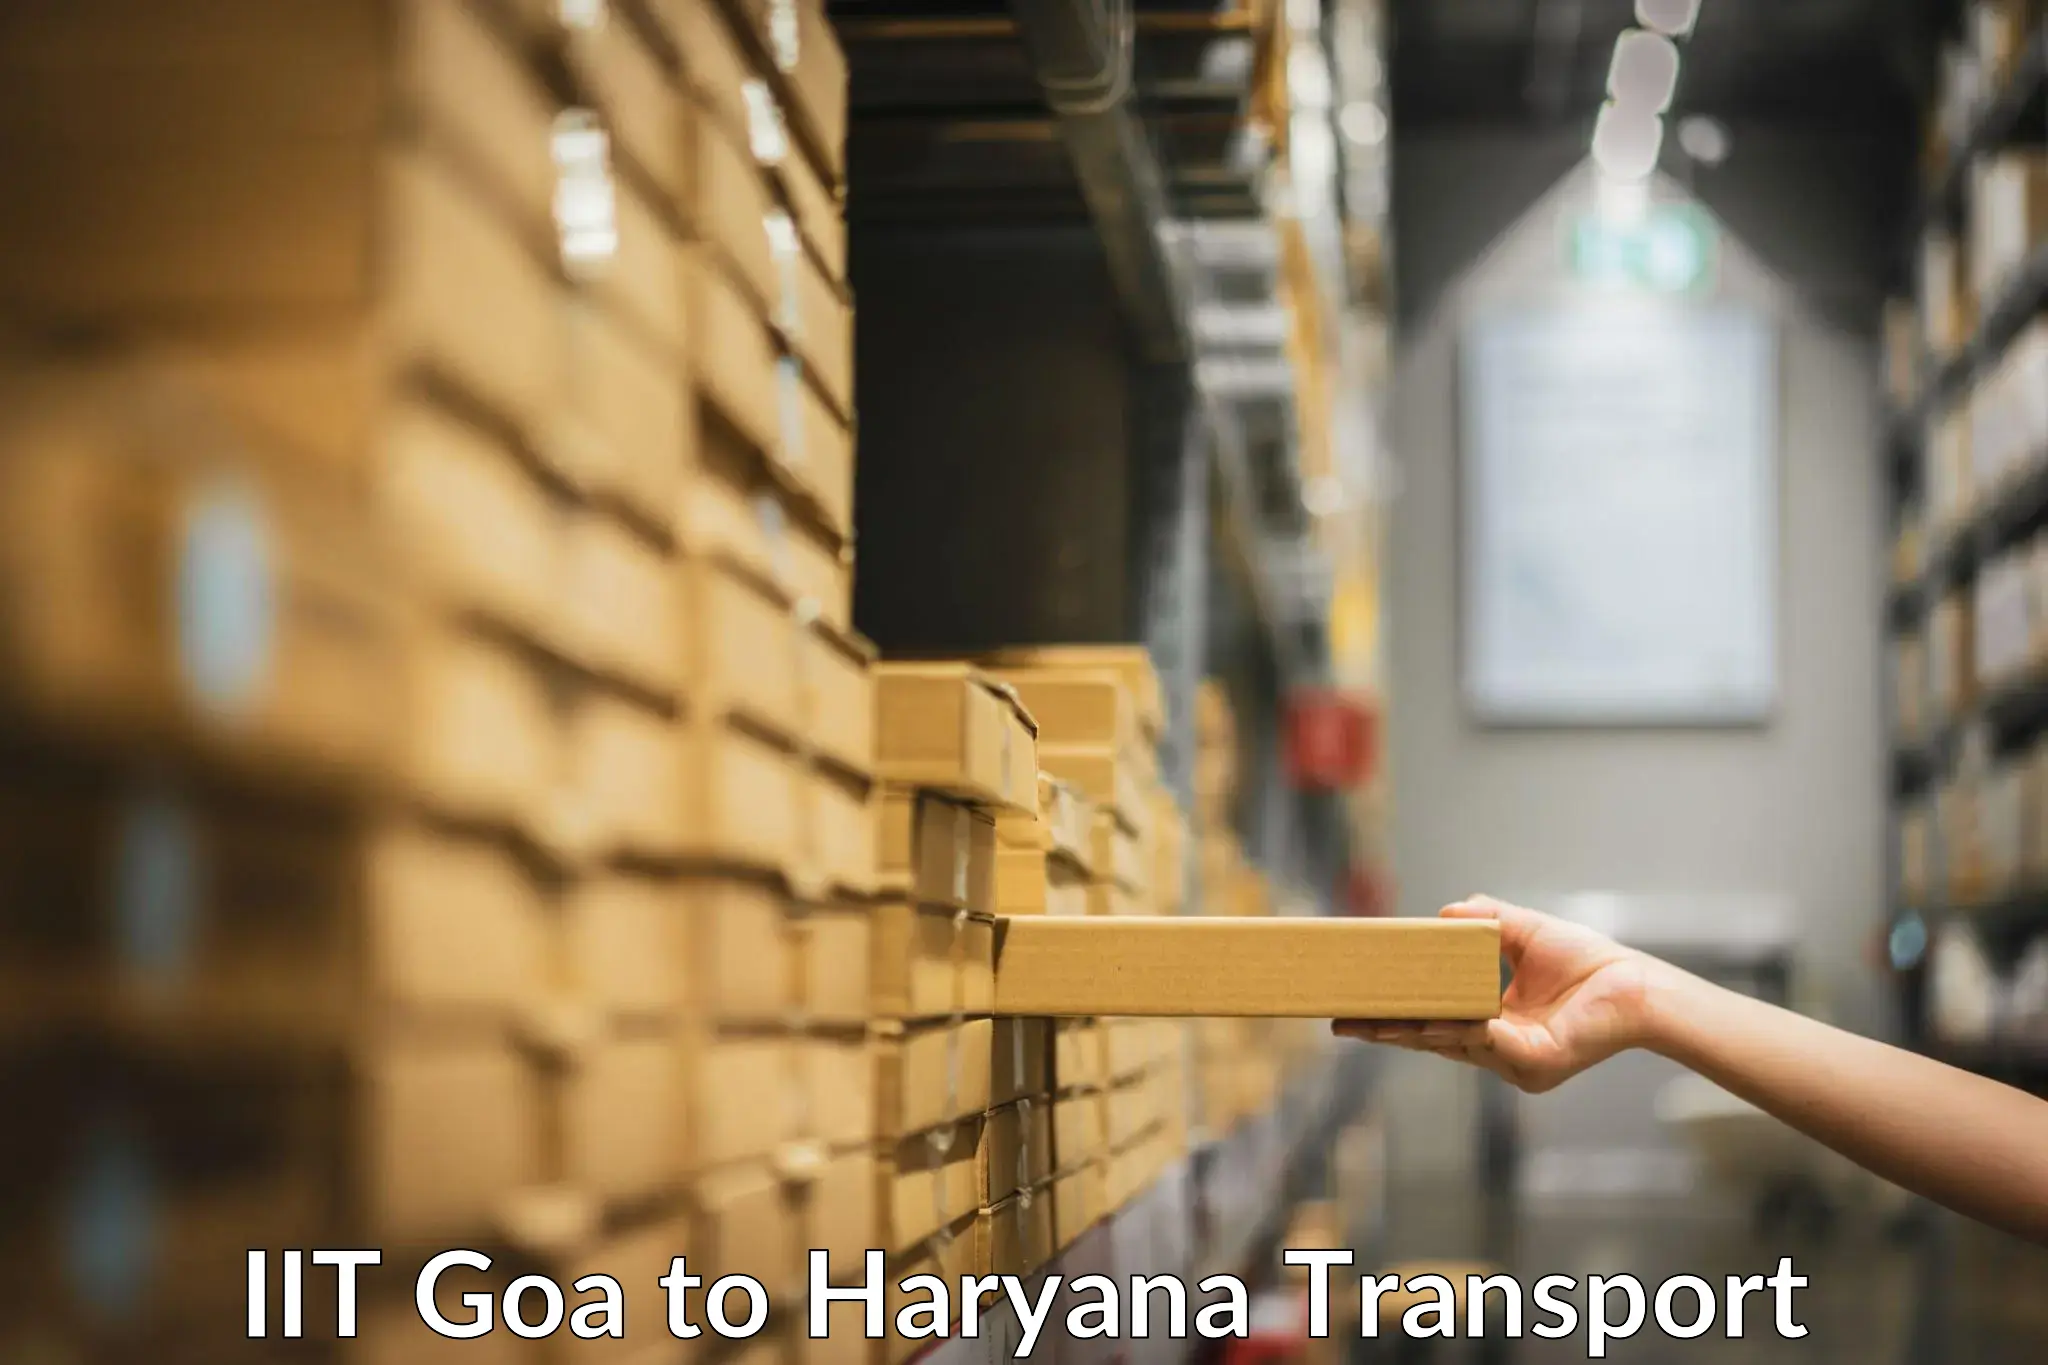 Nearby transport service IIT Goa to Haryana